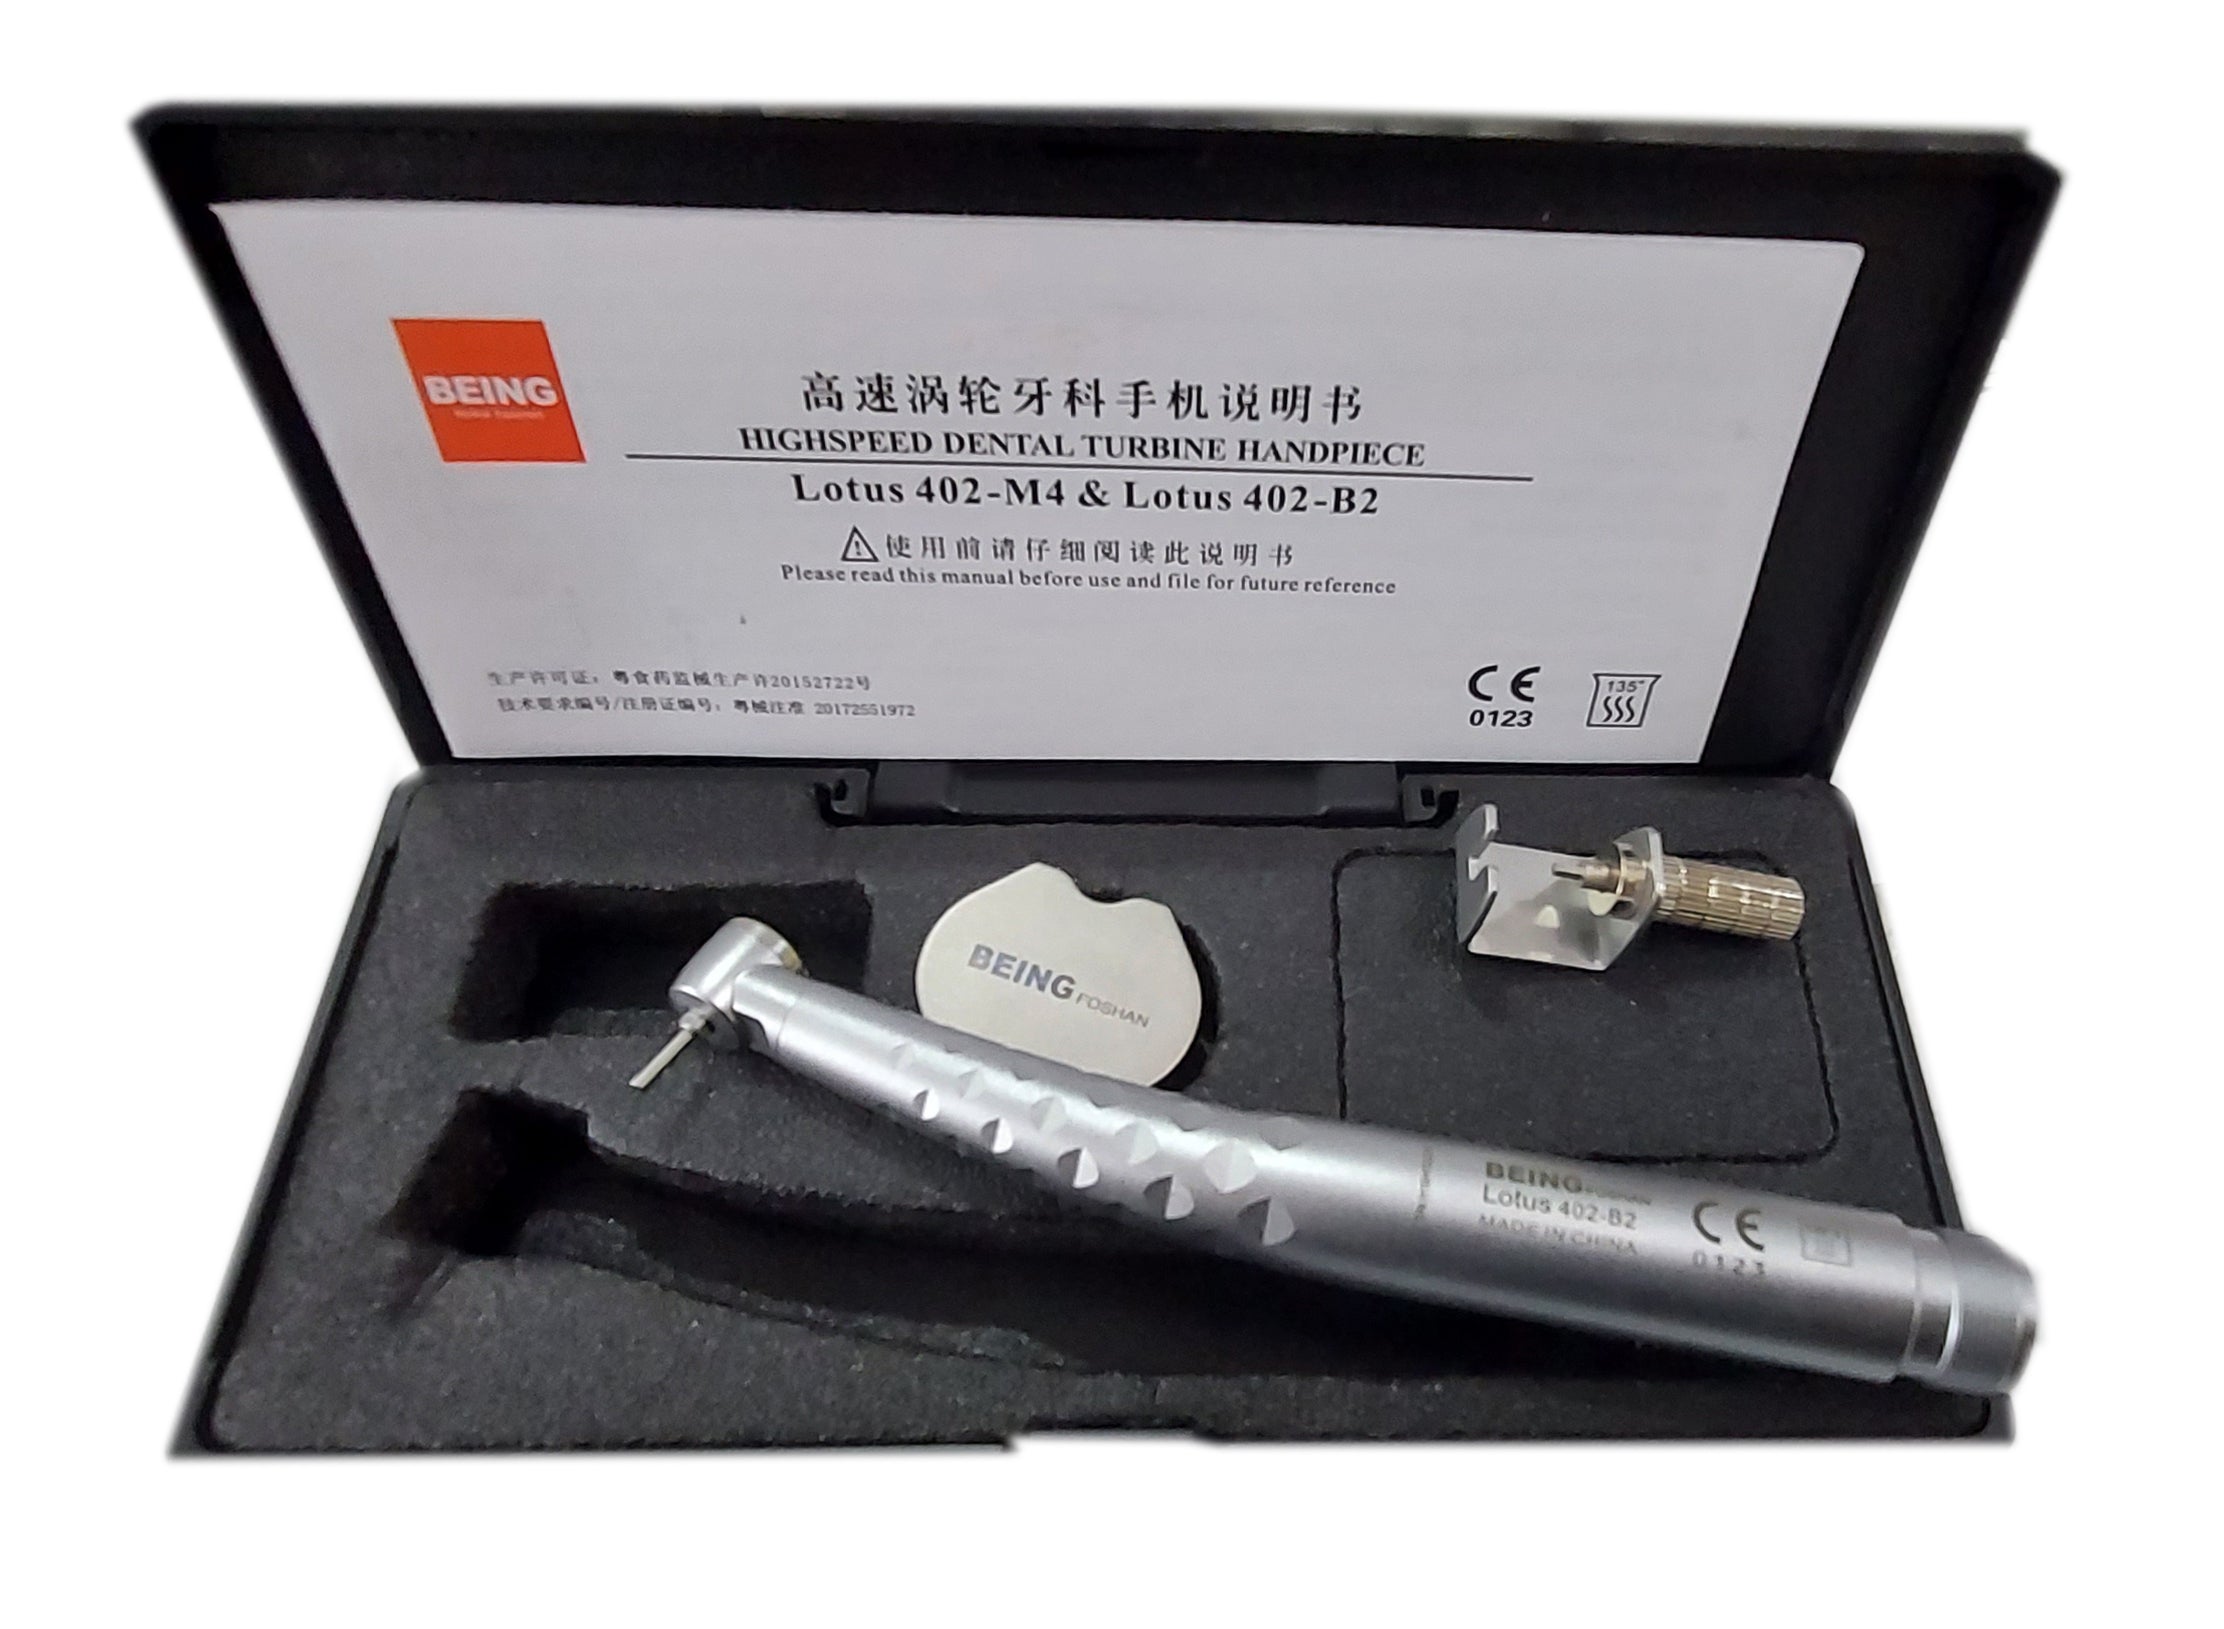 Being Foshan Air Rotor Pedo Handpiece with Bur Changing Key (402-B2)